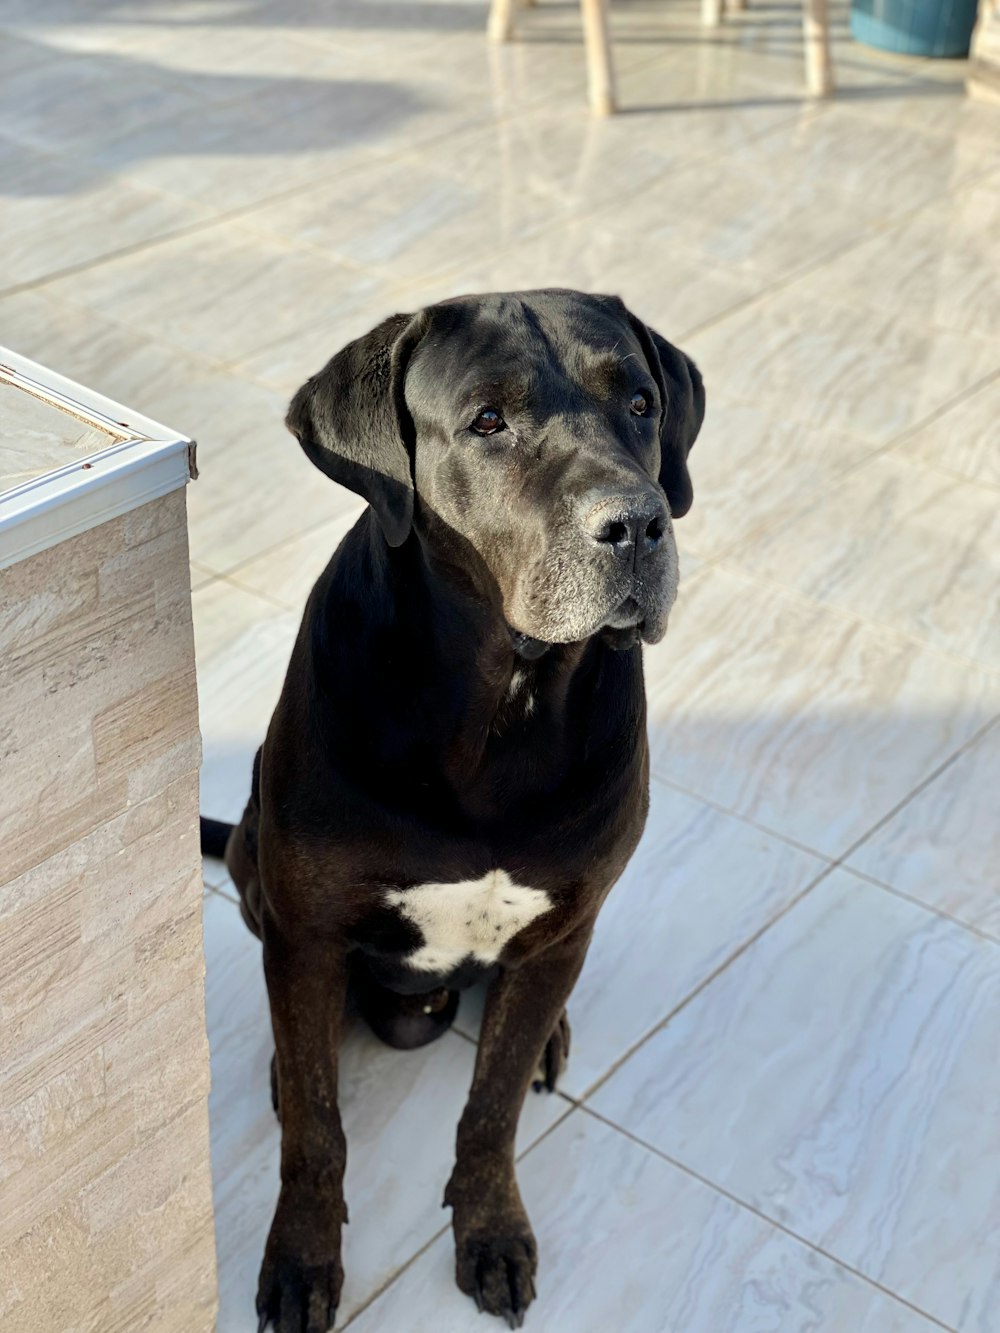 a large black dog sitting on top of a tile floor